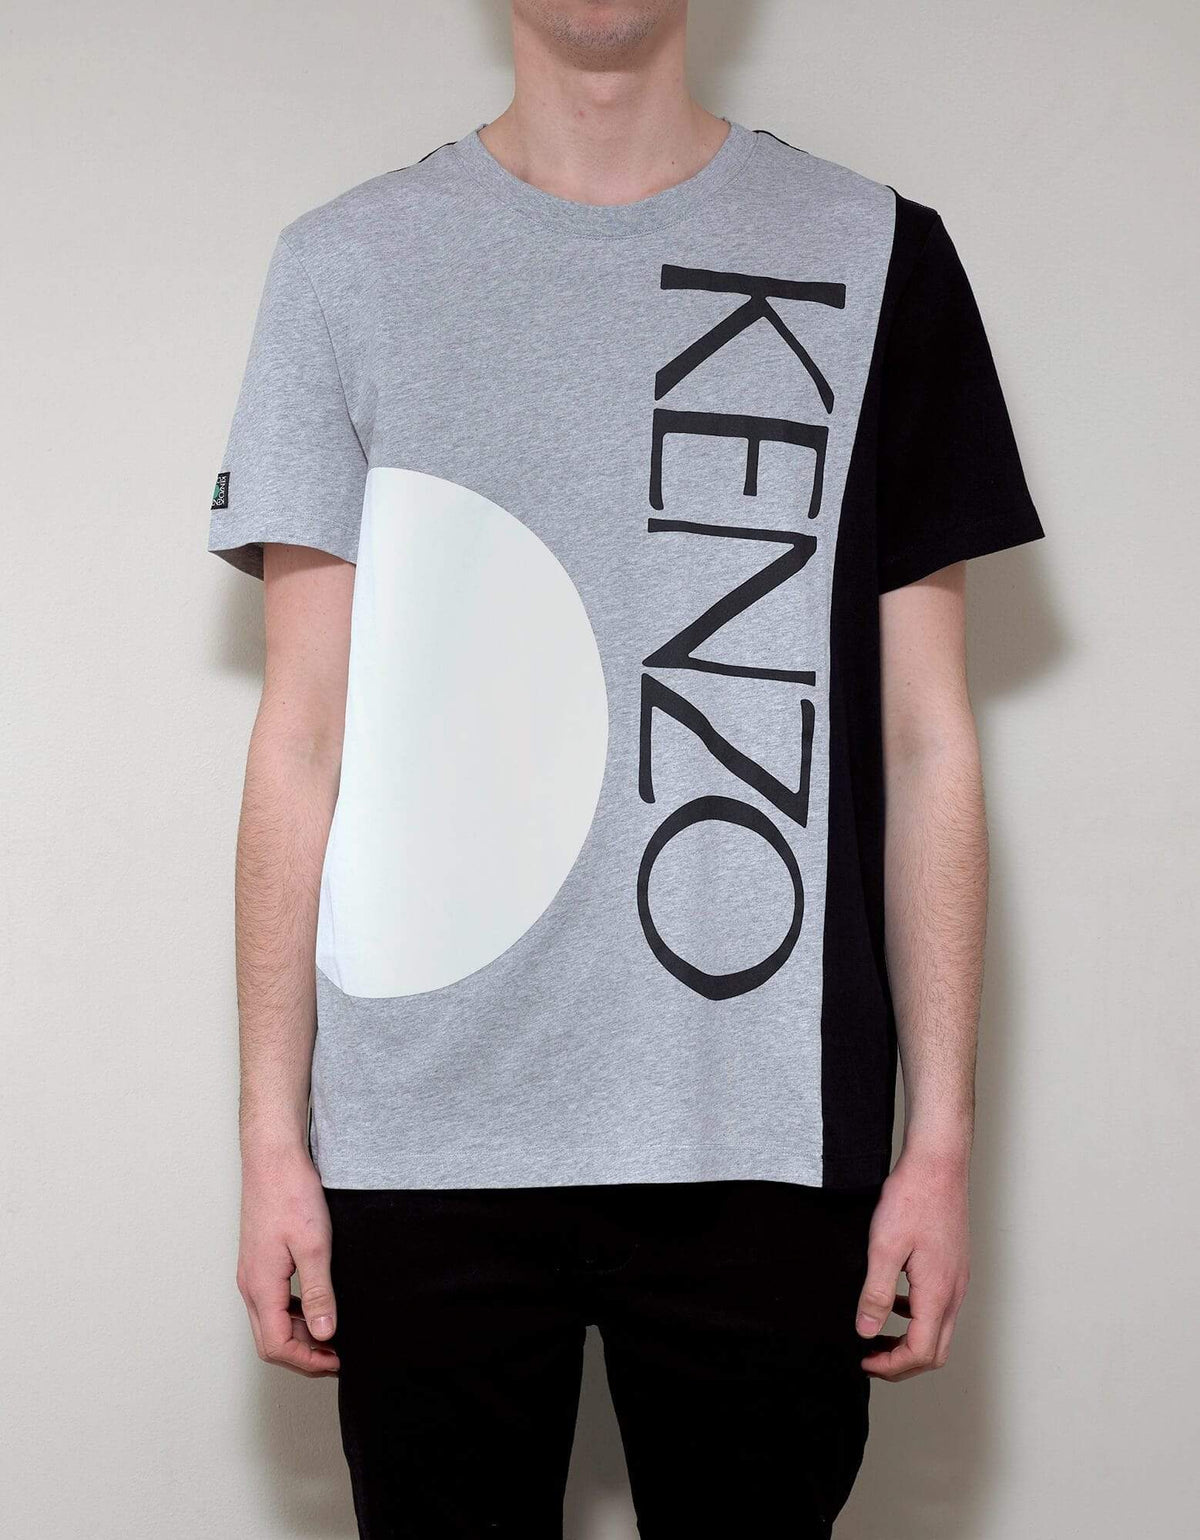 Kenzo Grey White Circle Print T-Shirt